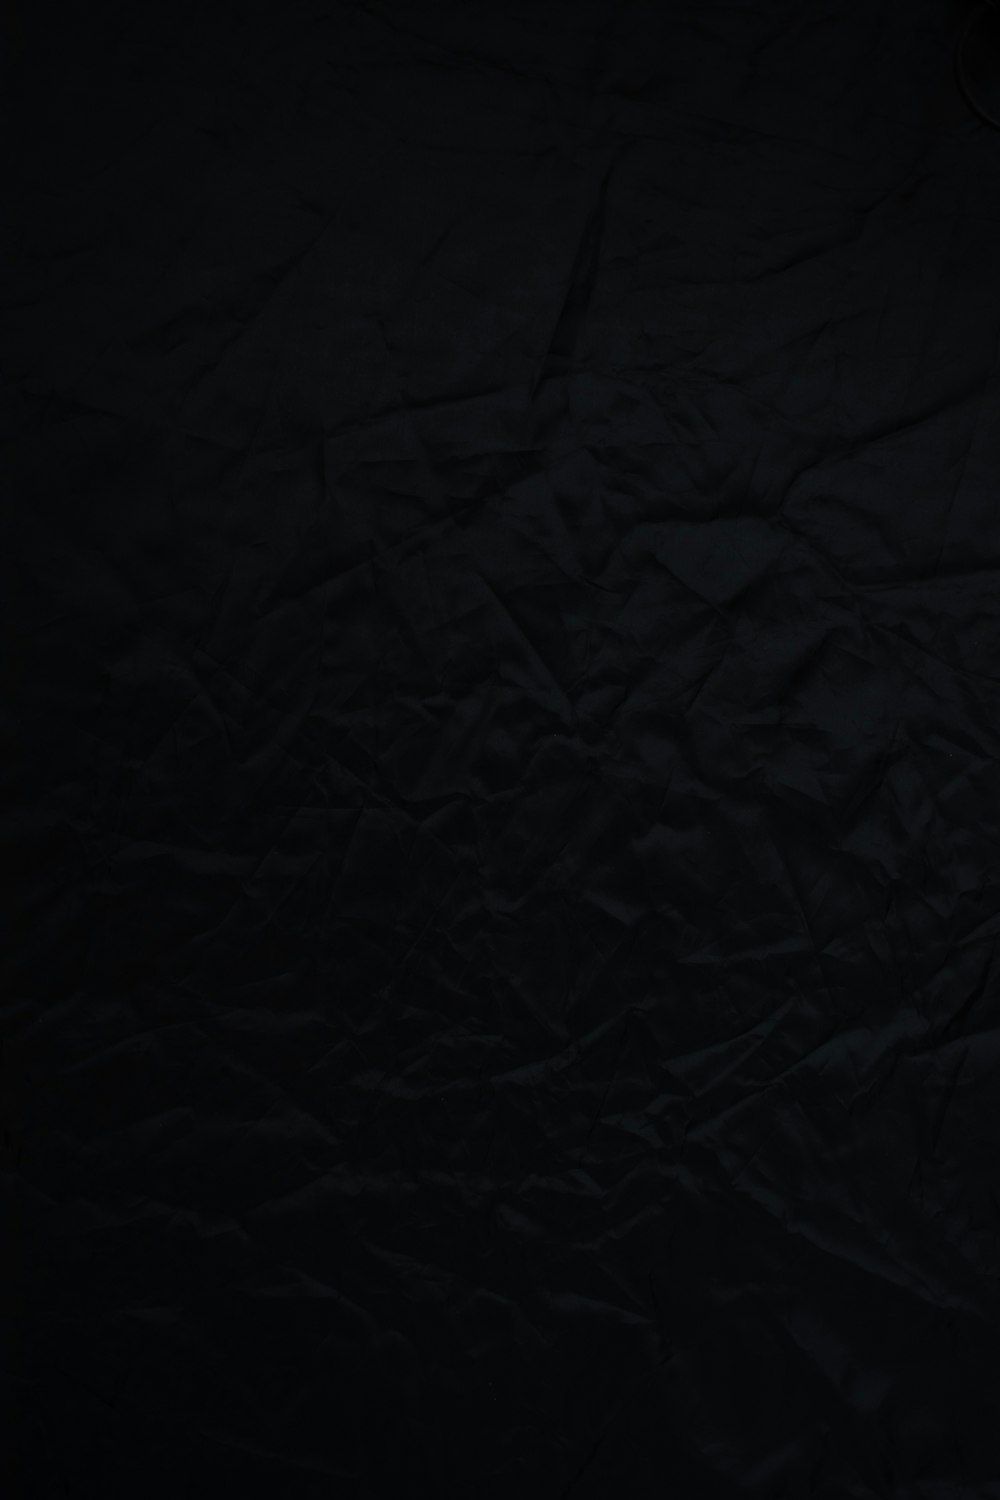 30k+ Black Iphone Wallpaper Pictures | Download Free Images on Unsplash